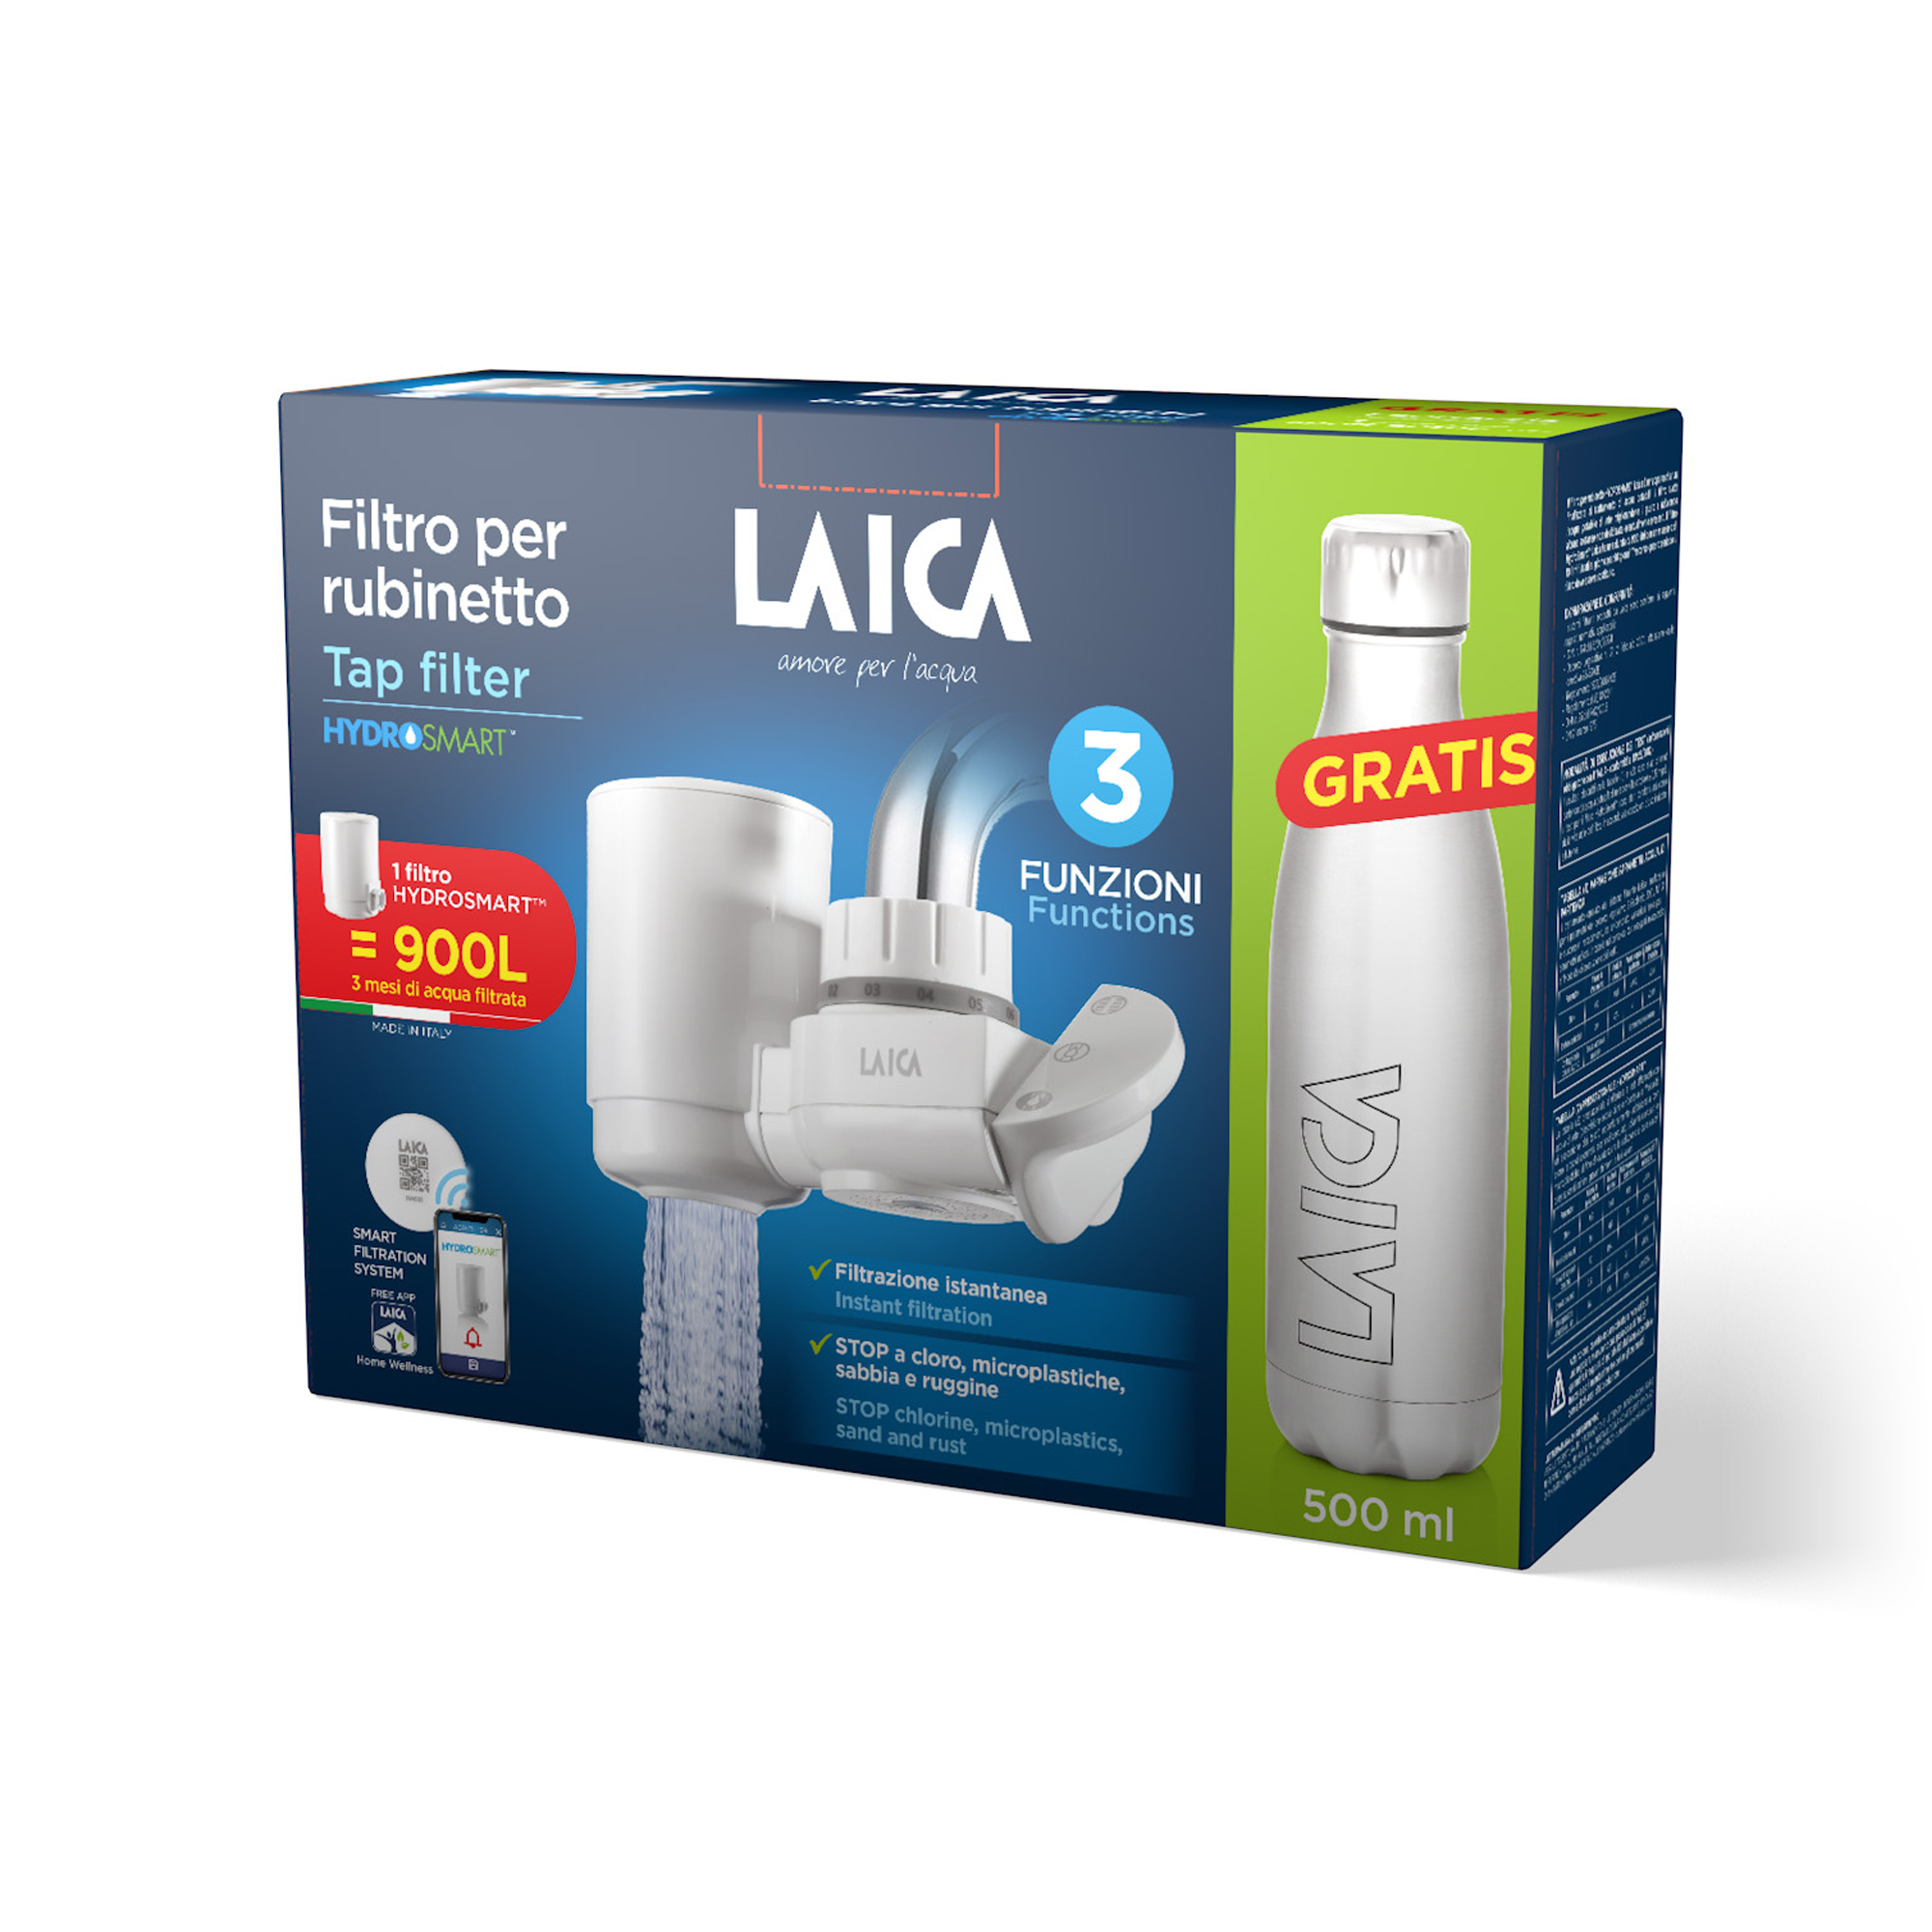 LAICA LA289 Filter cartridge, Blanco